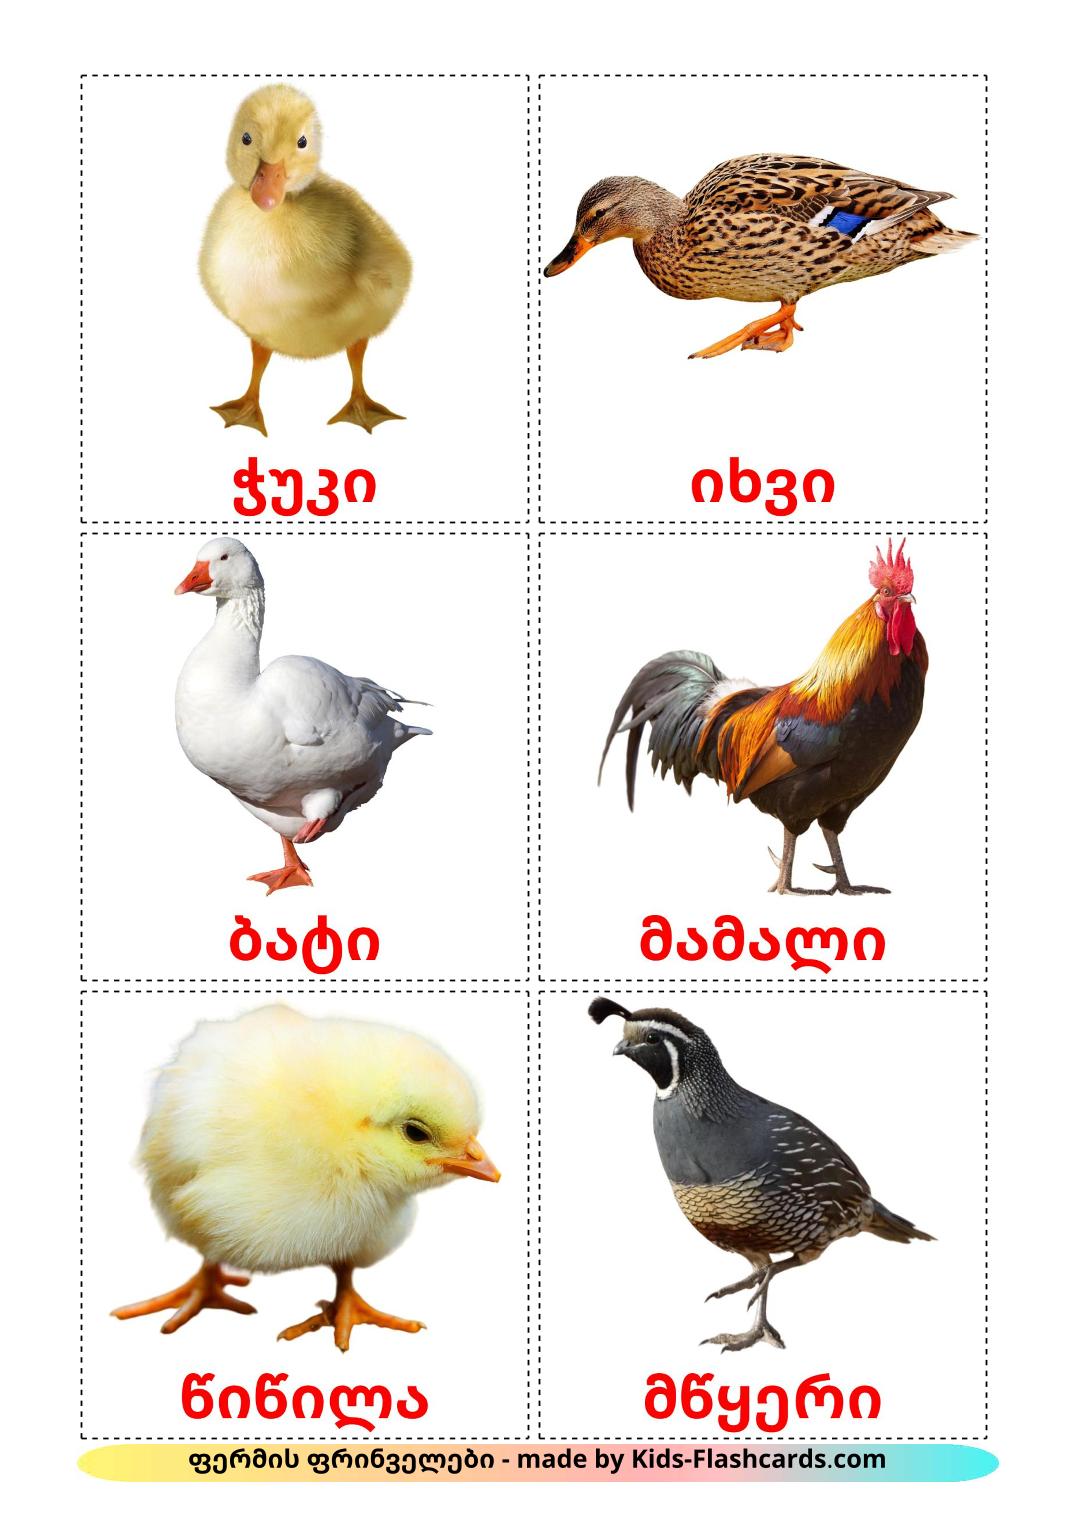 Aves de granja - 11 fichas de georgiano para imprimir gratis 